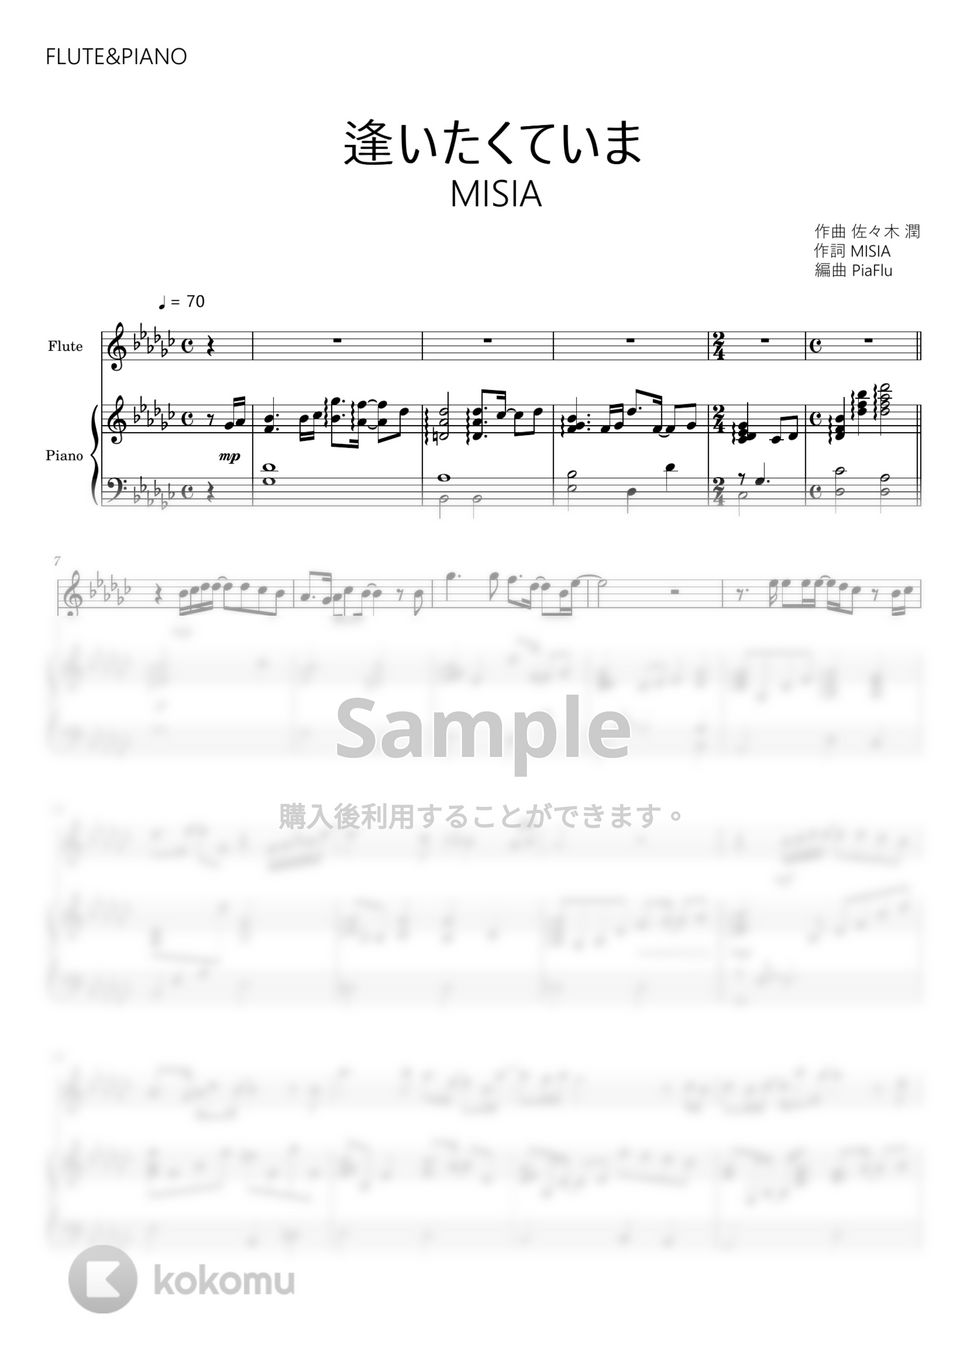 MISIA - 逢いたくていま (フルート&ピアノ伴奏) by PiaFlu